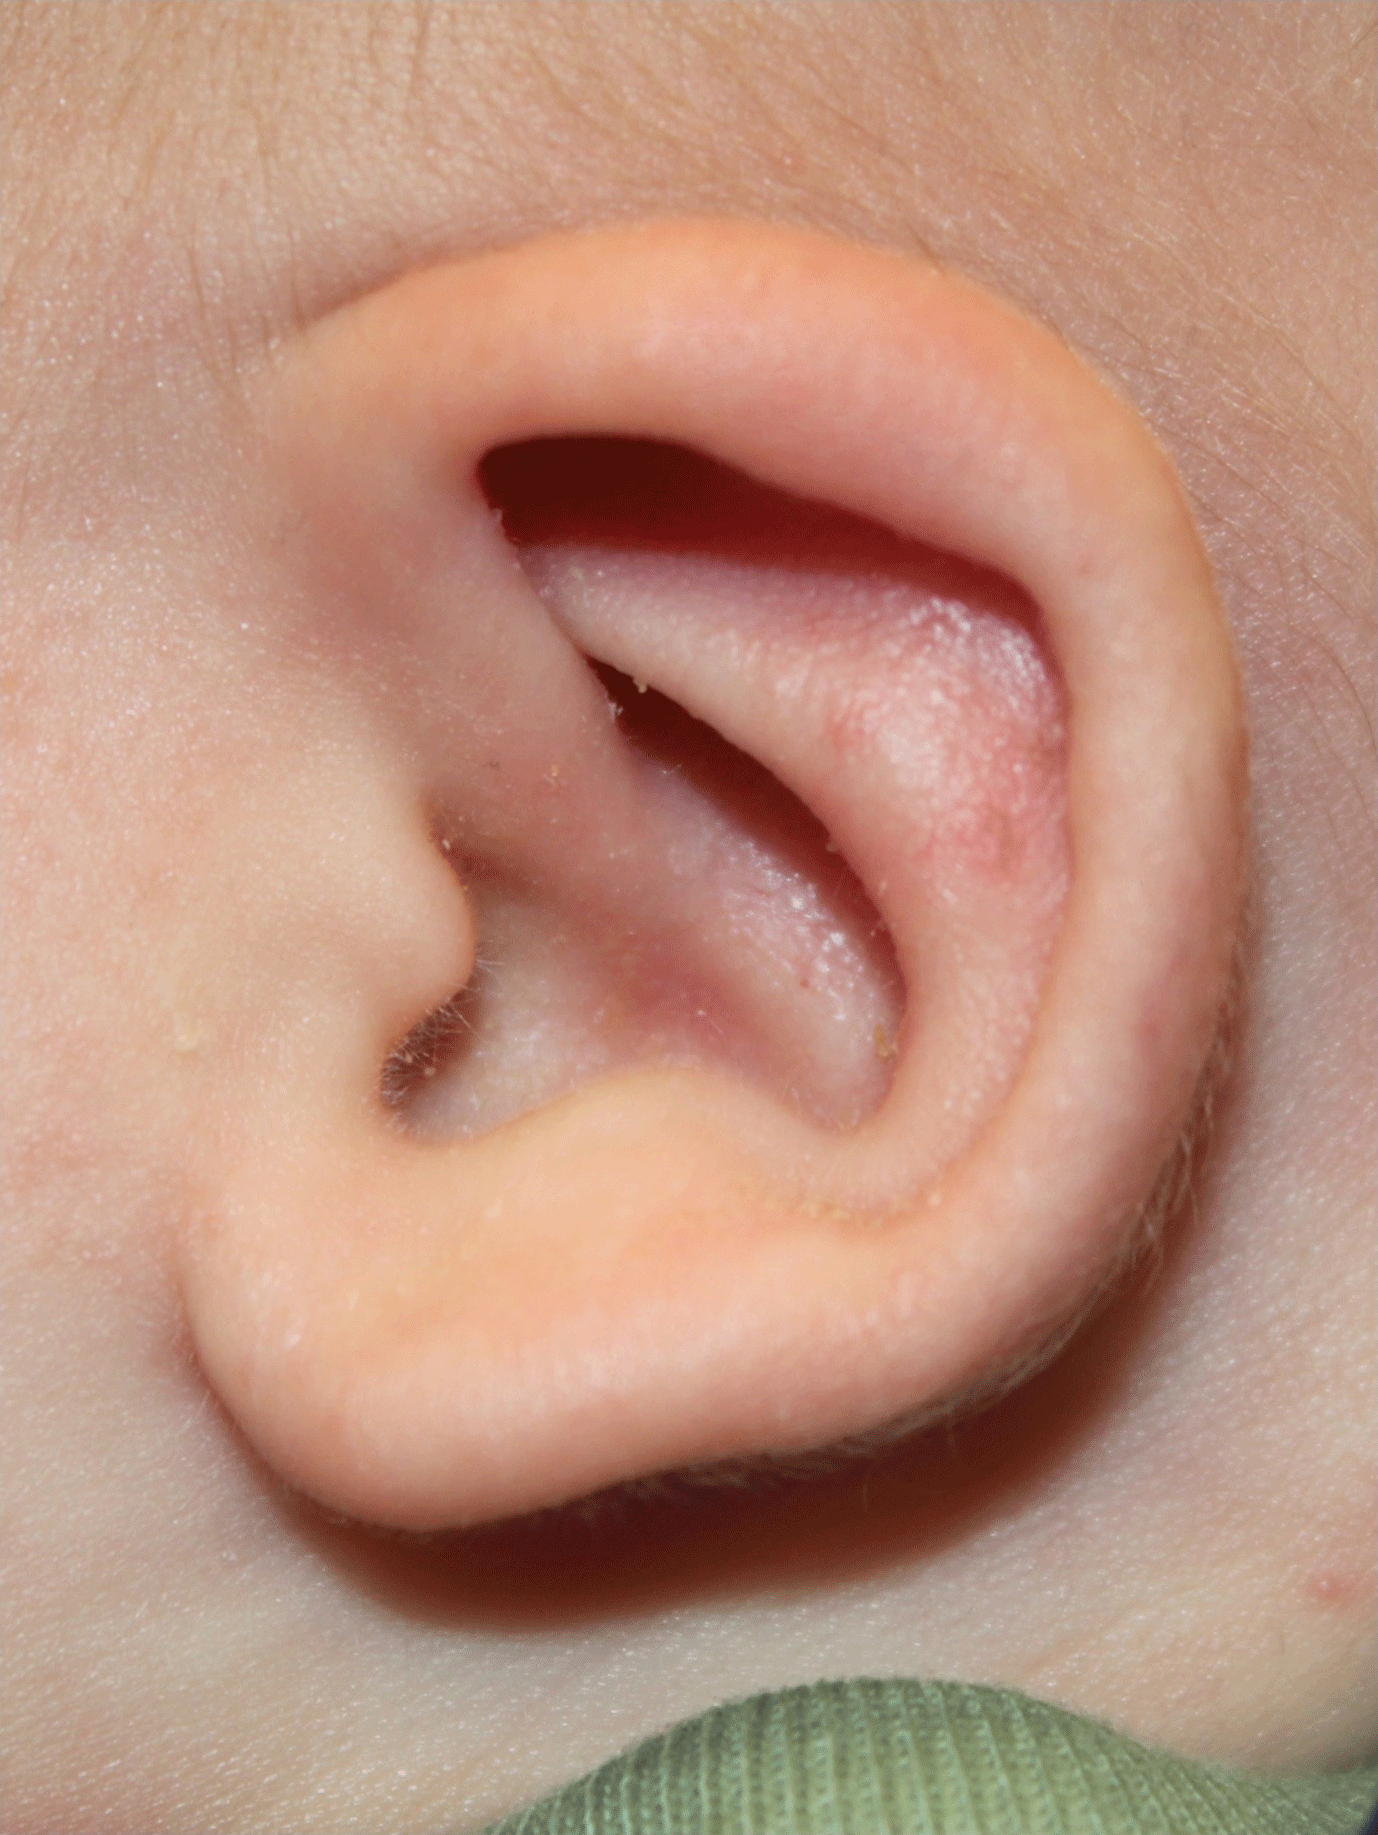 Ear Reshaping